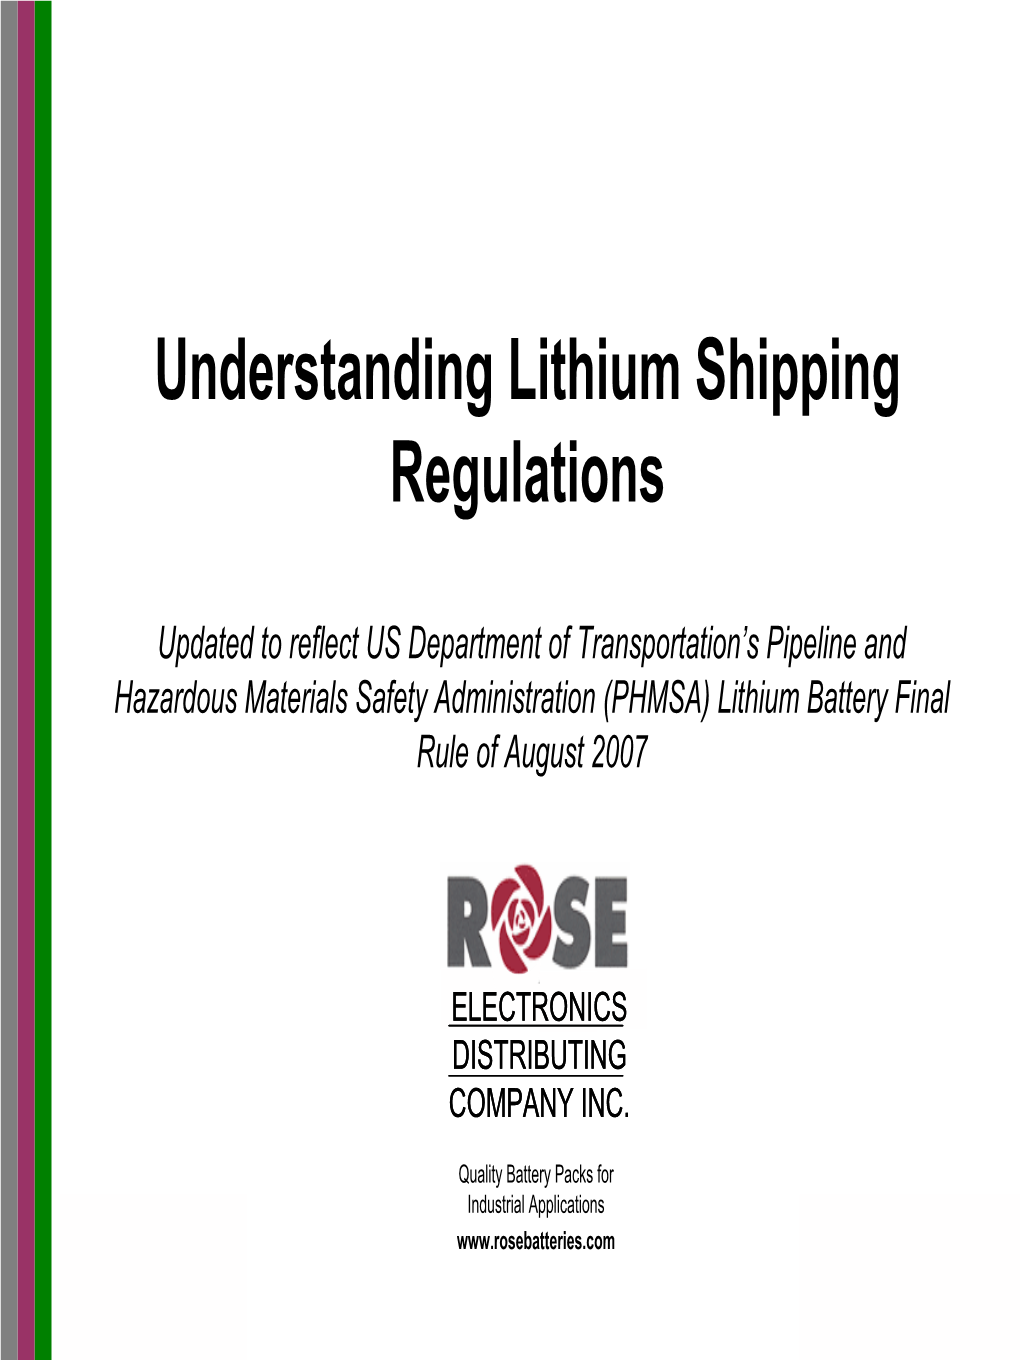 Understanding Lithium Shipping Regulations